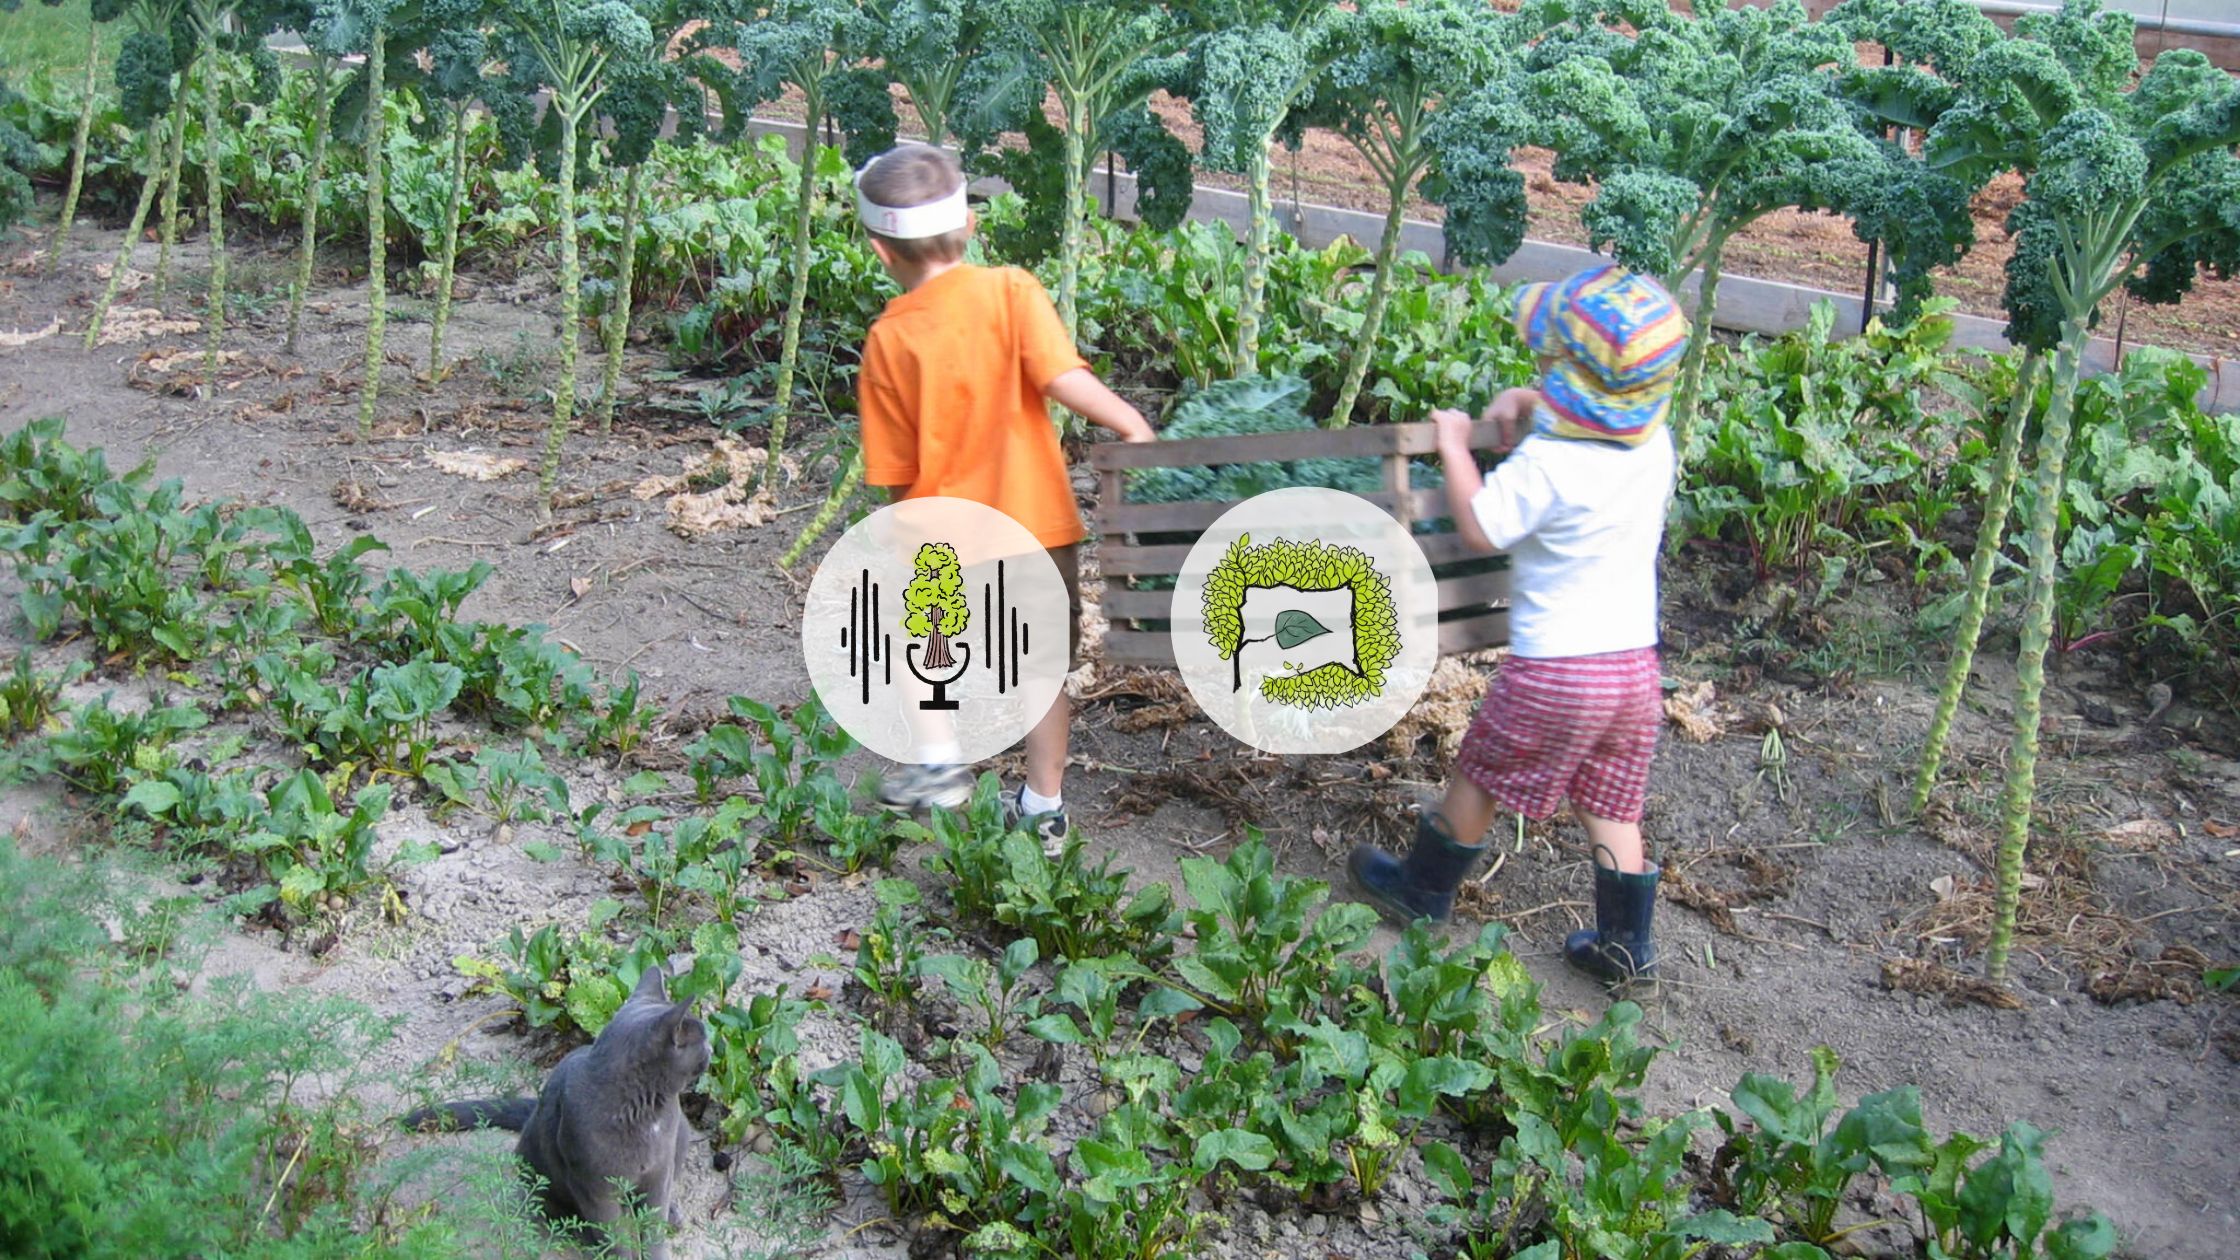 Children - Noah and Ben - carrying kale in a garden.